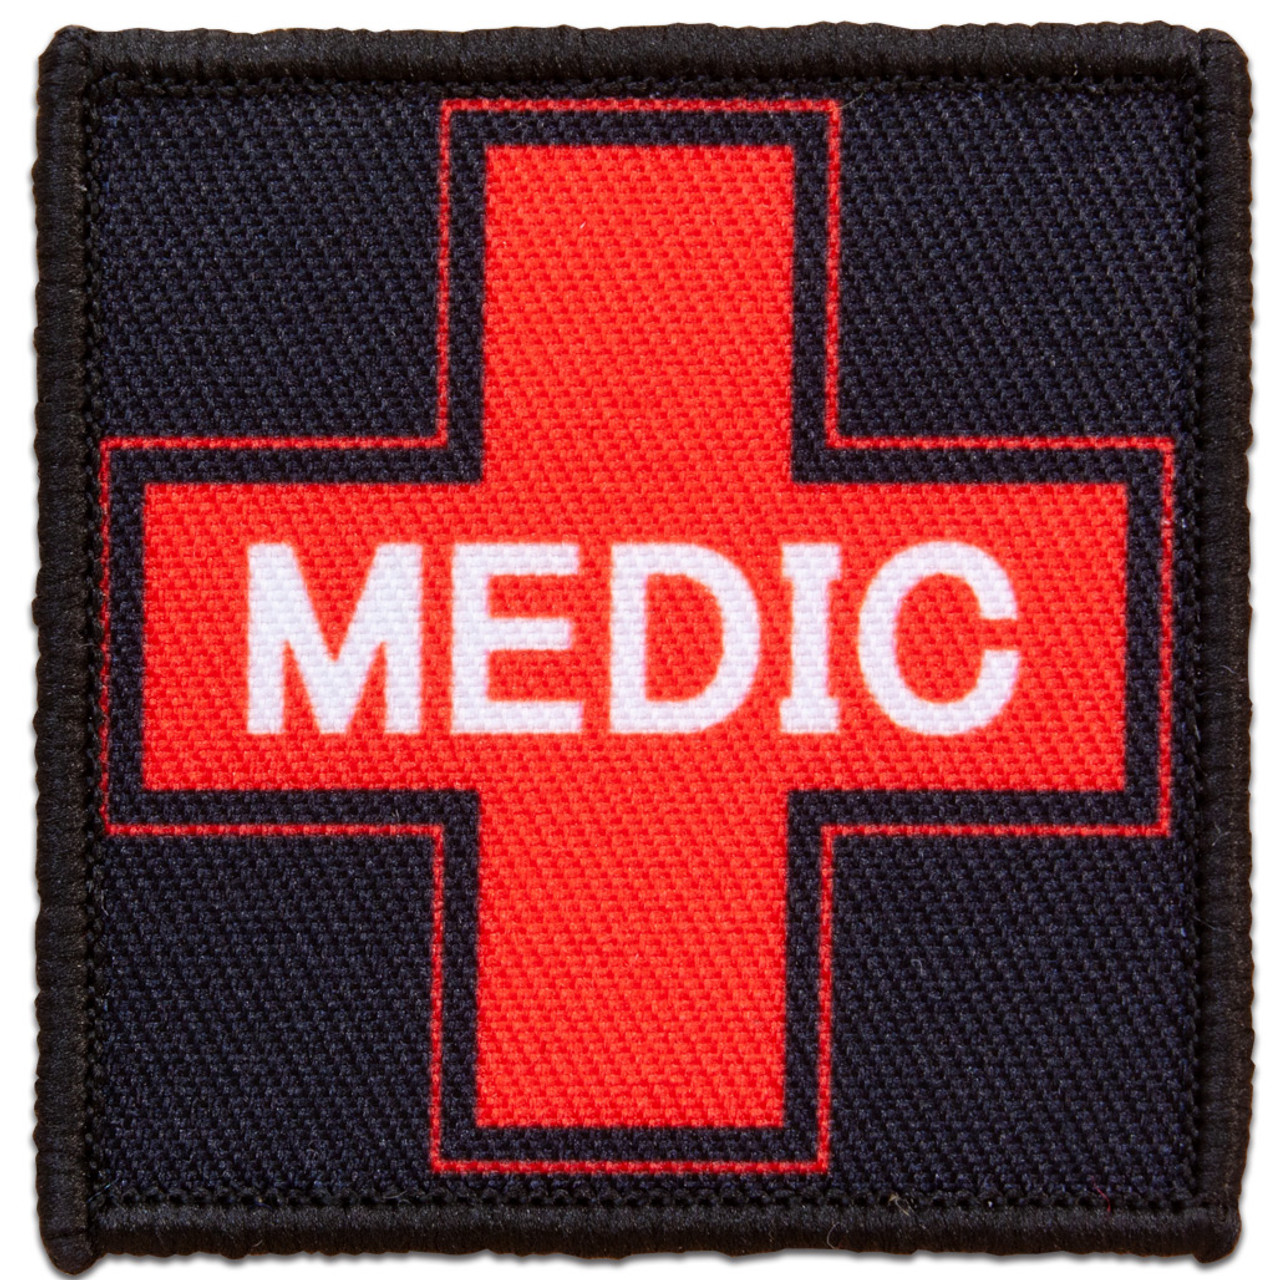 Patch - Medic